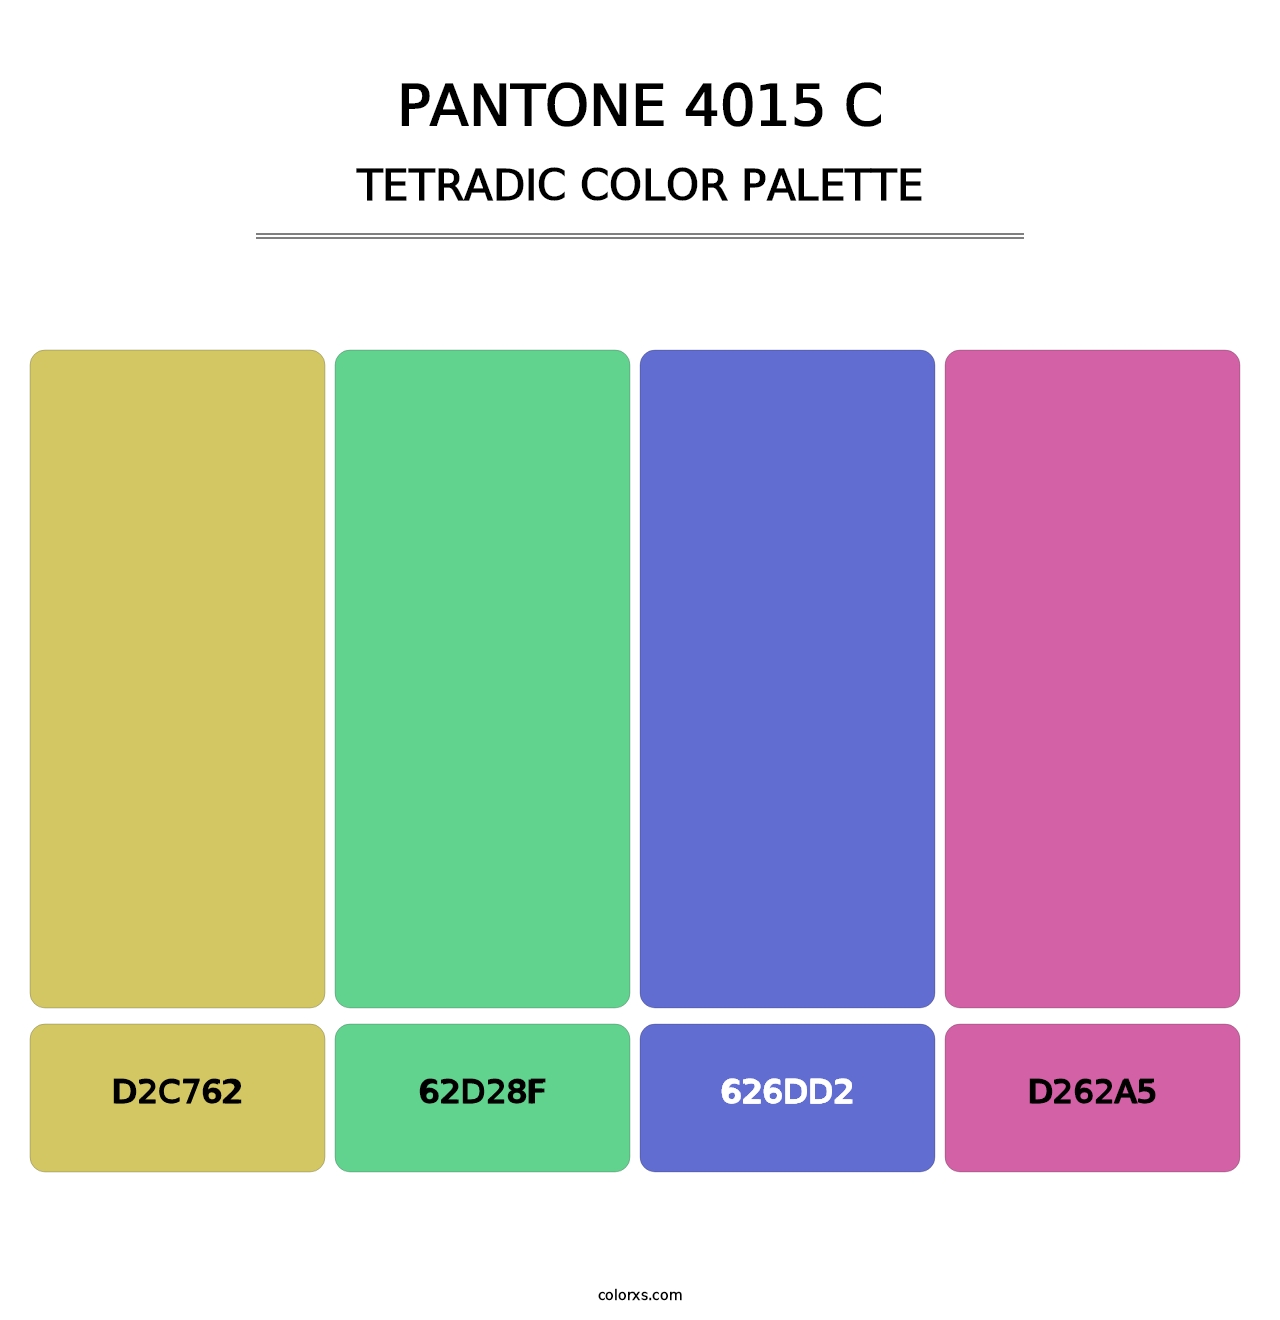 PANTONE 4015 C - Tetradic Color Palette